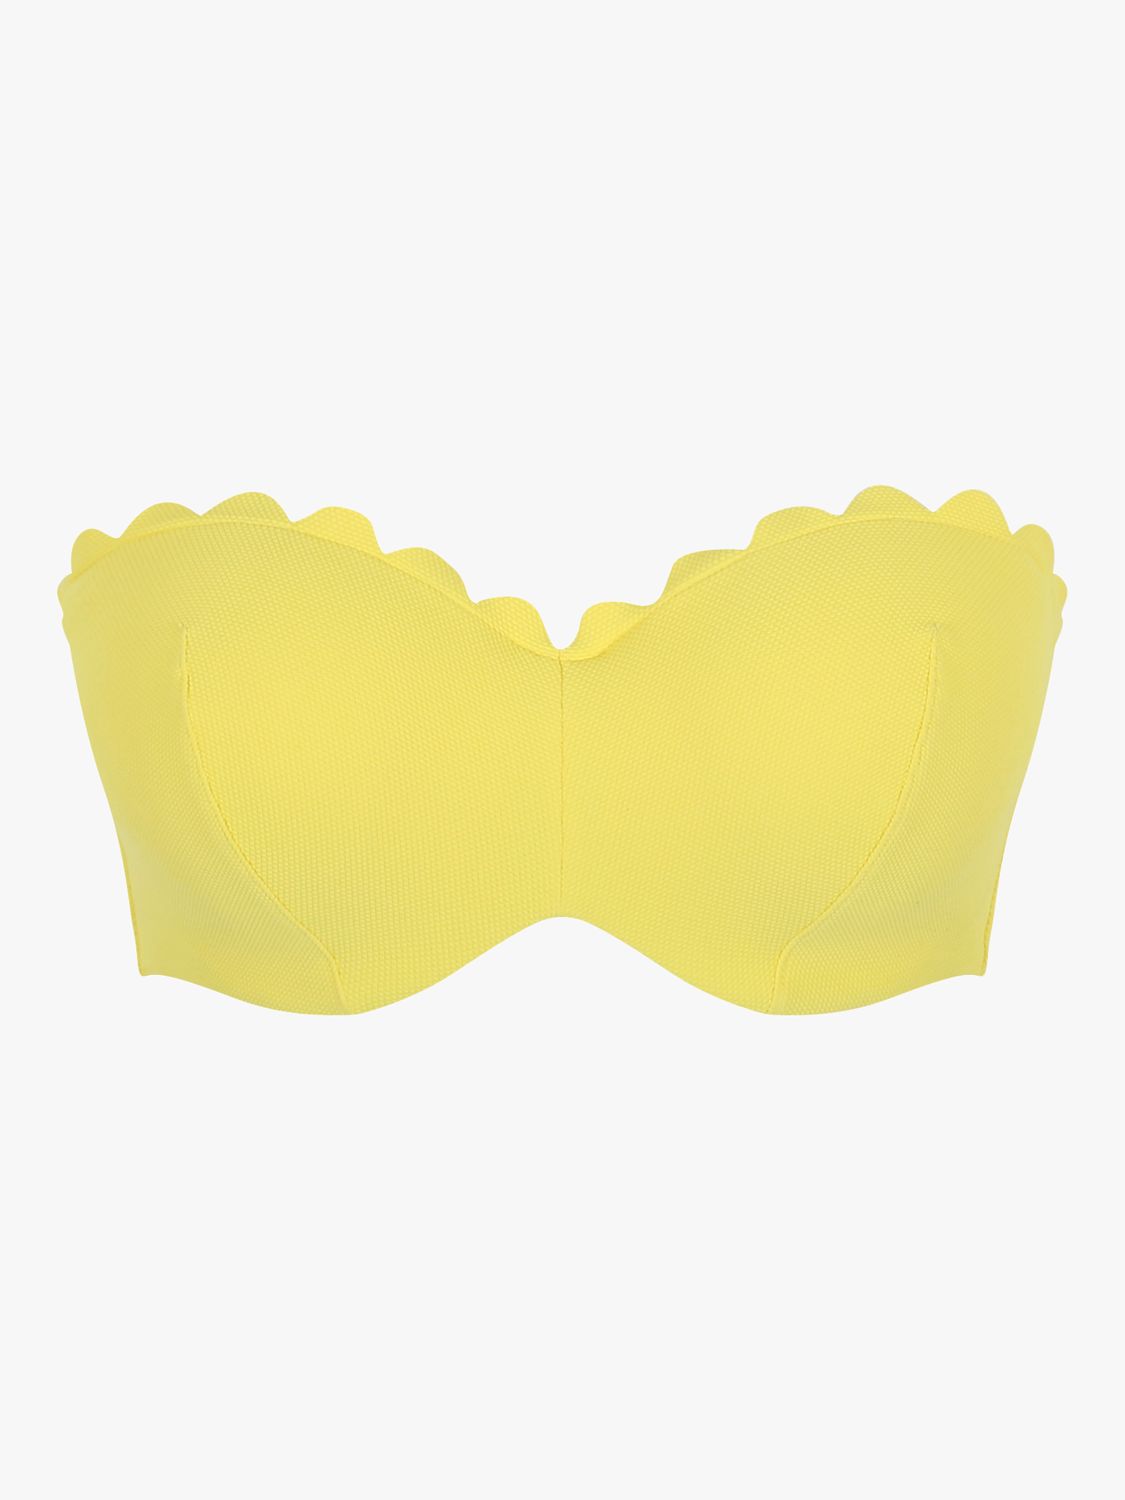 Panache Swim Poppy Moulded Bandeau Bikini Top, Sunshine, 38F